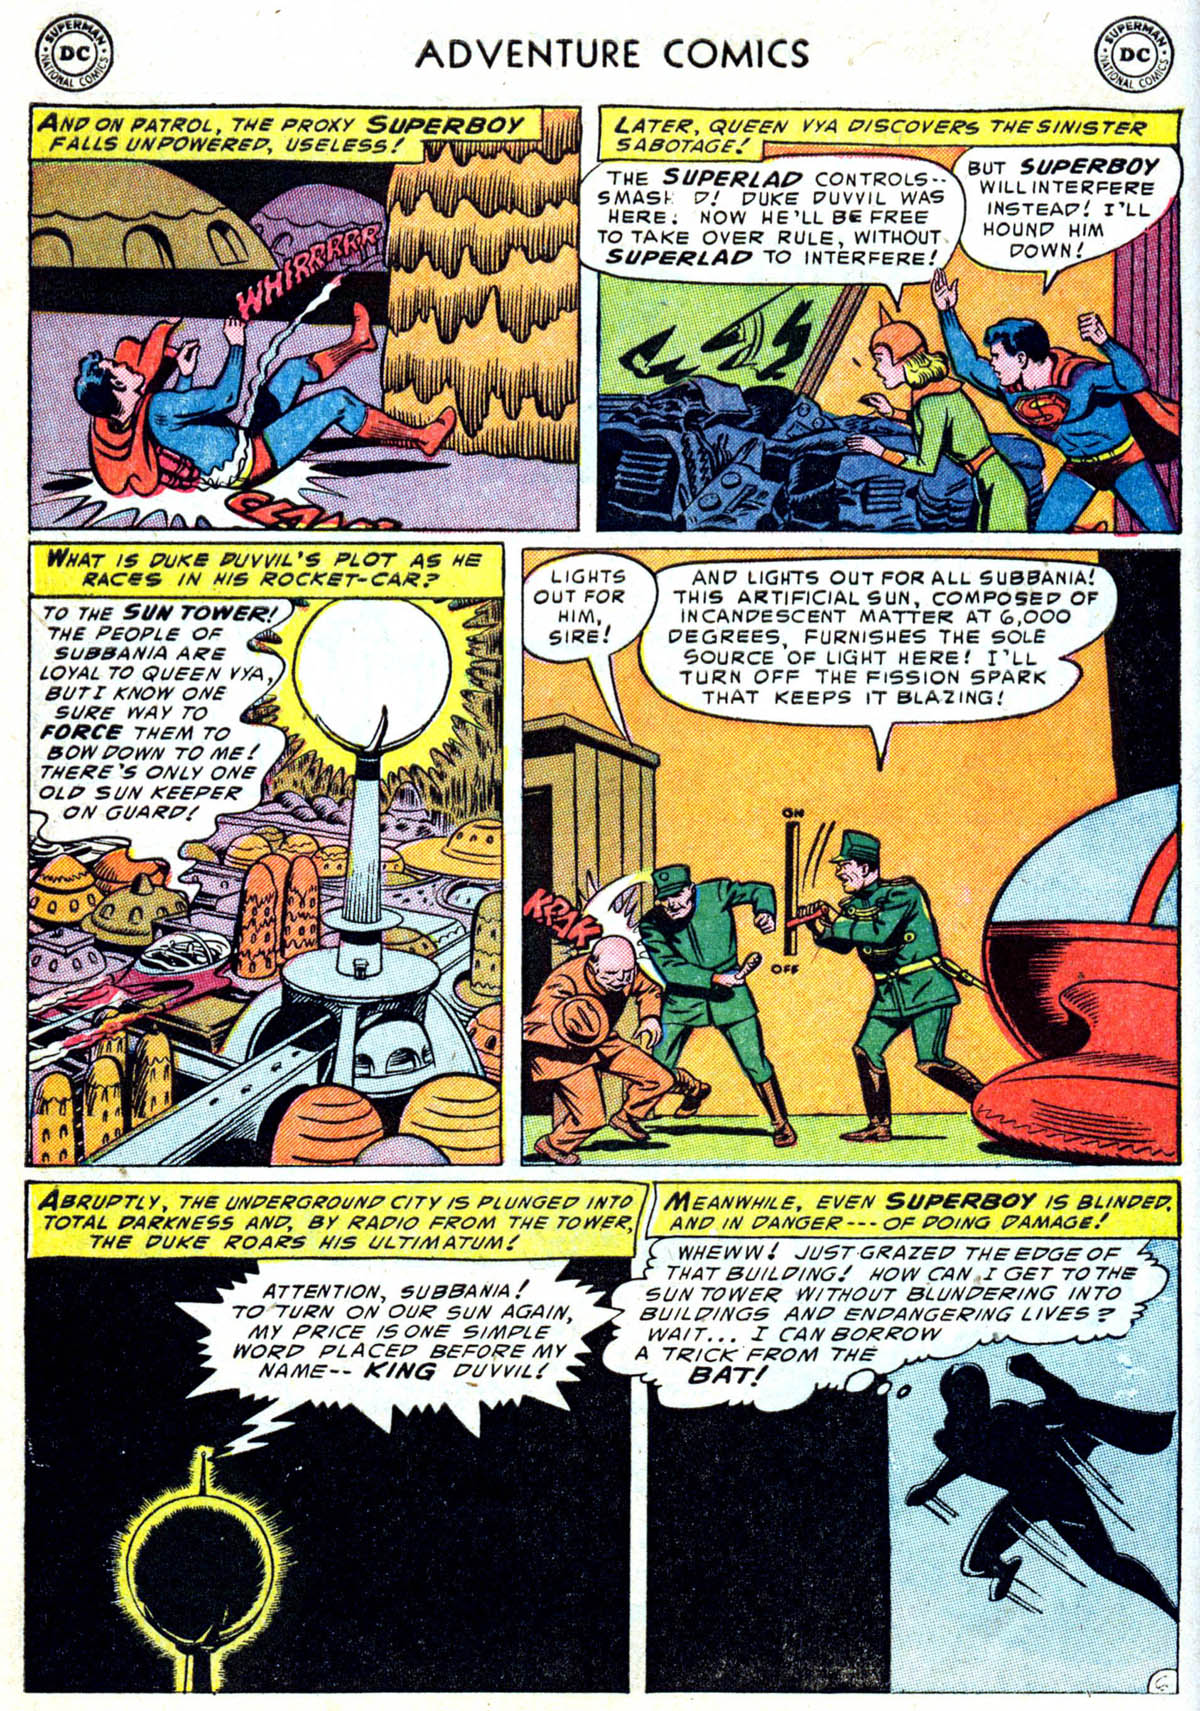 Adventure Comics (1938) 199 Page 6